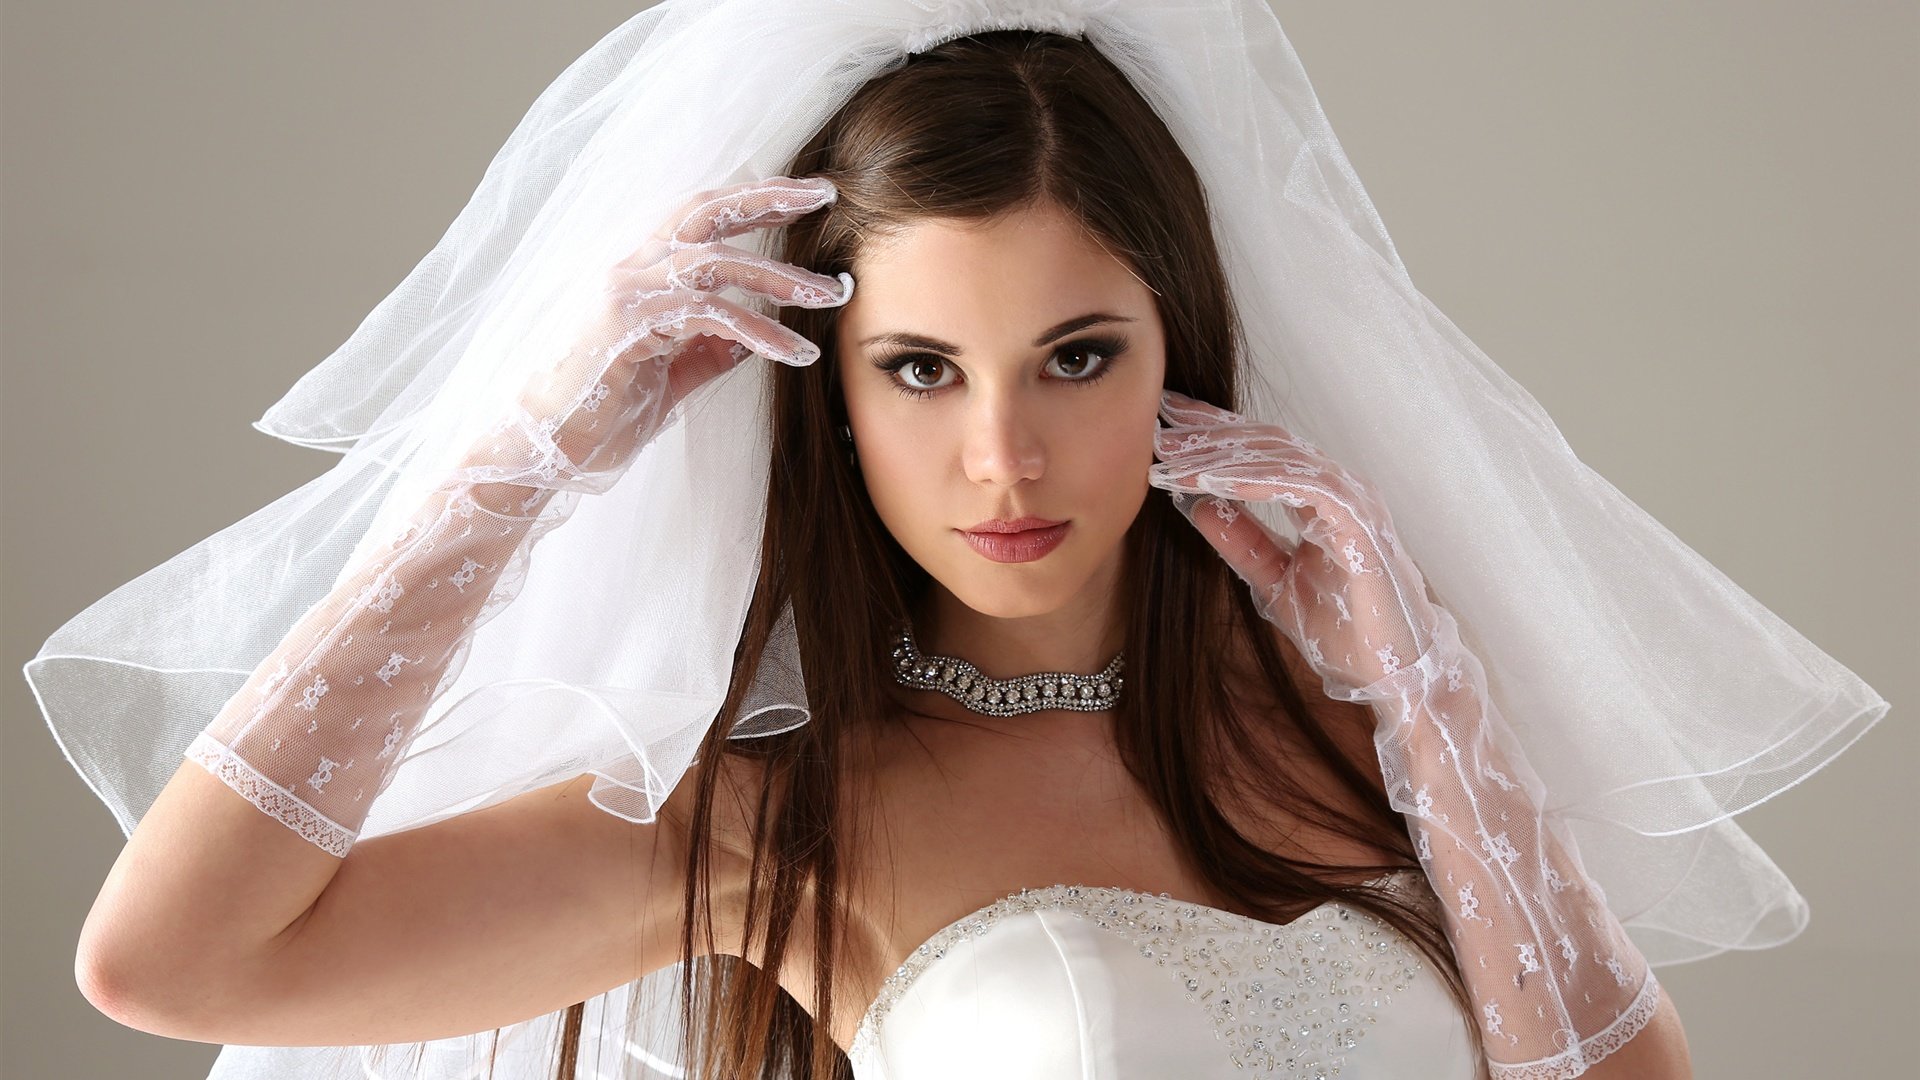 Bride In Wedding Dress Wallpapers 1920x1080 Full Hd 1080p